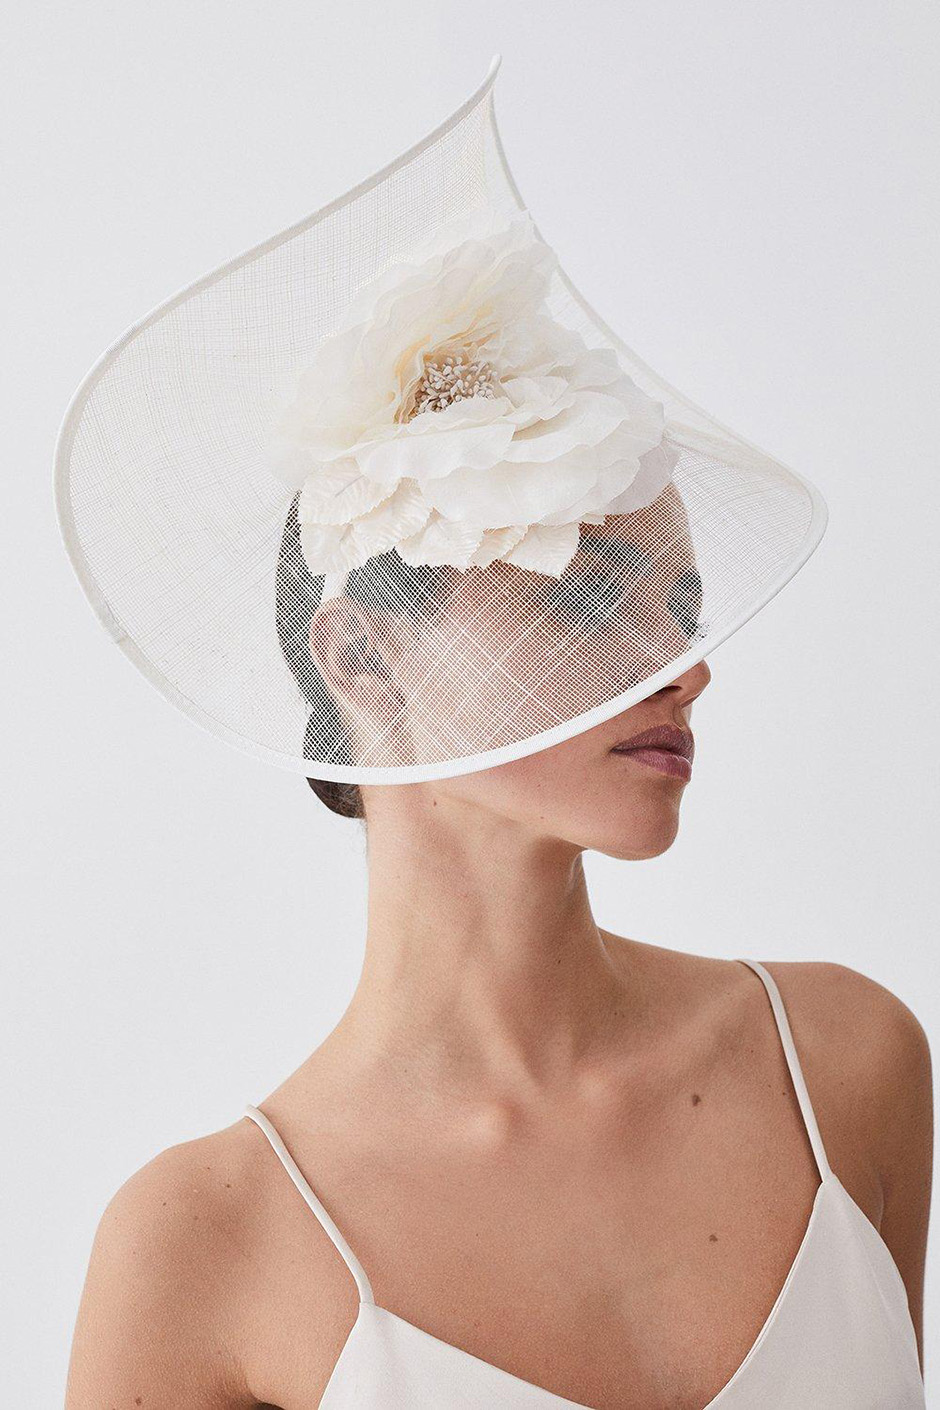 Karen Millen fascinator wedding hat in ivory with decorative flower